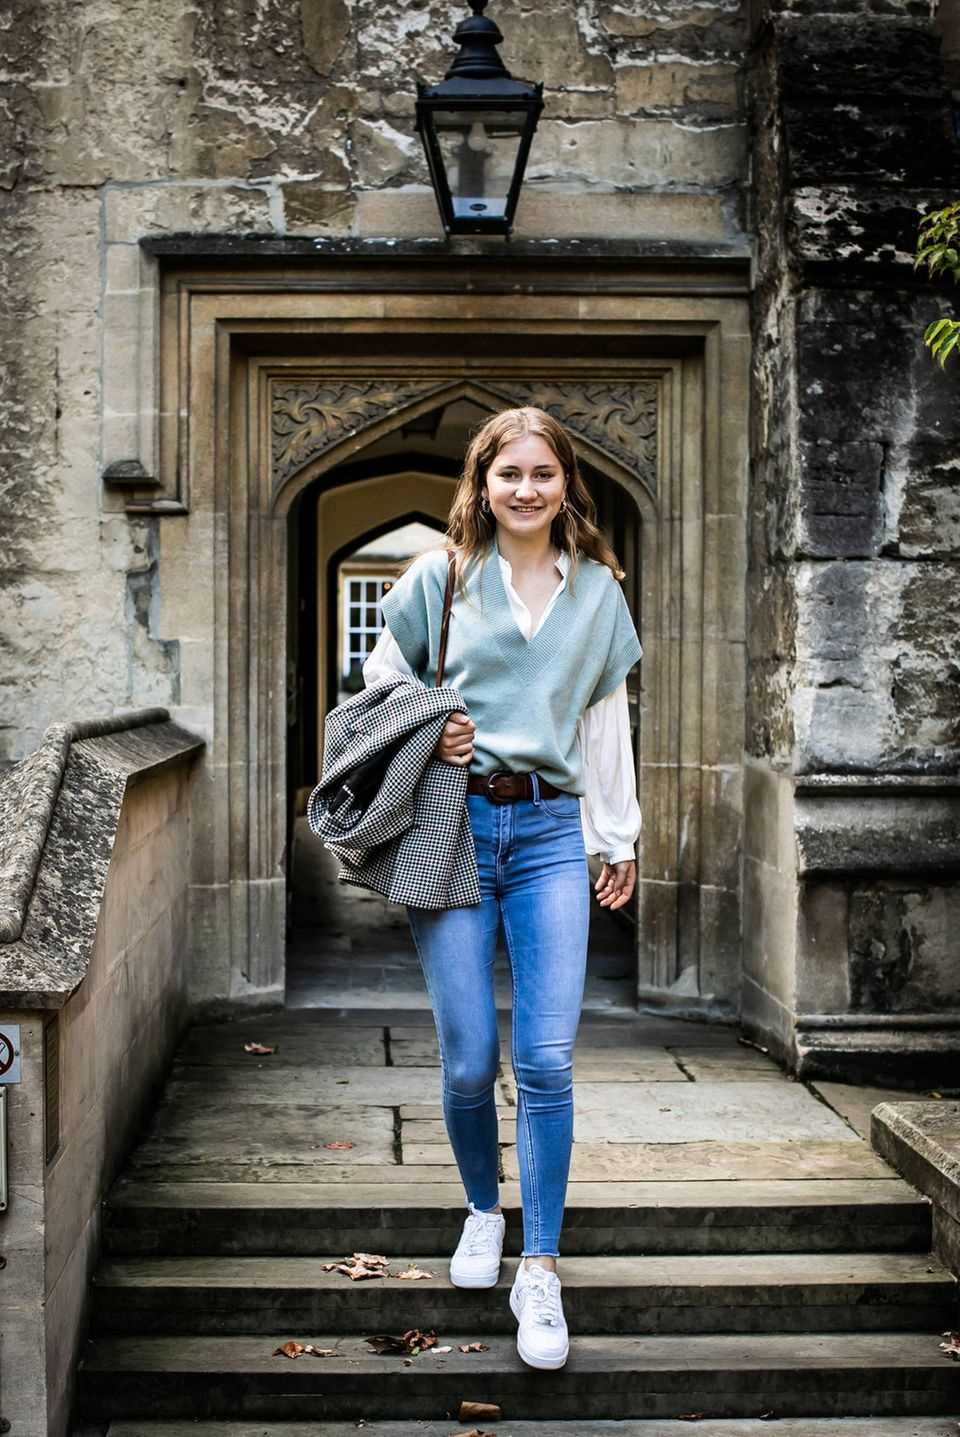 Princess Elisabeth of Belgium in Oxford